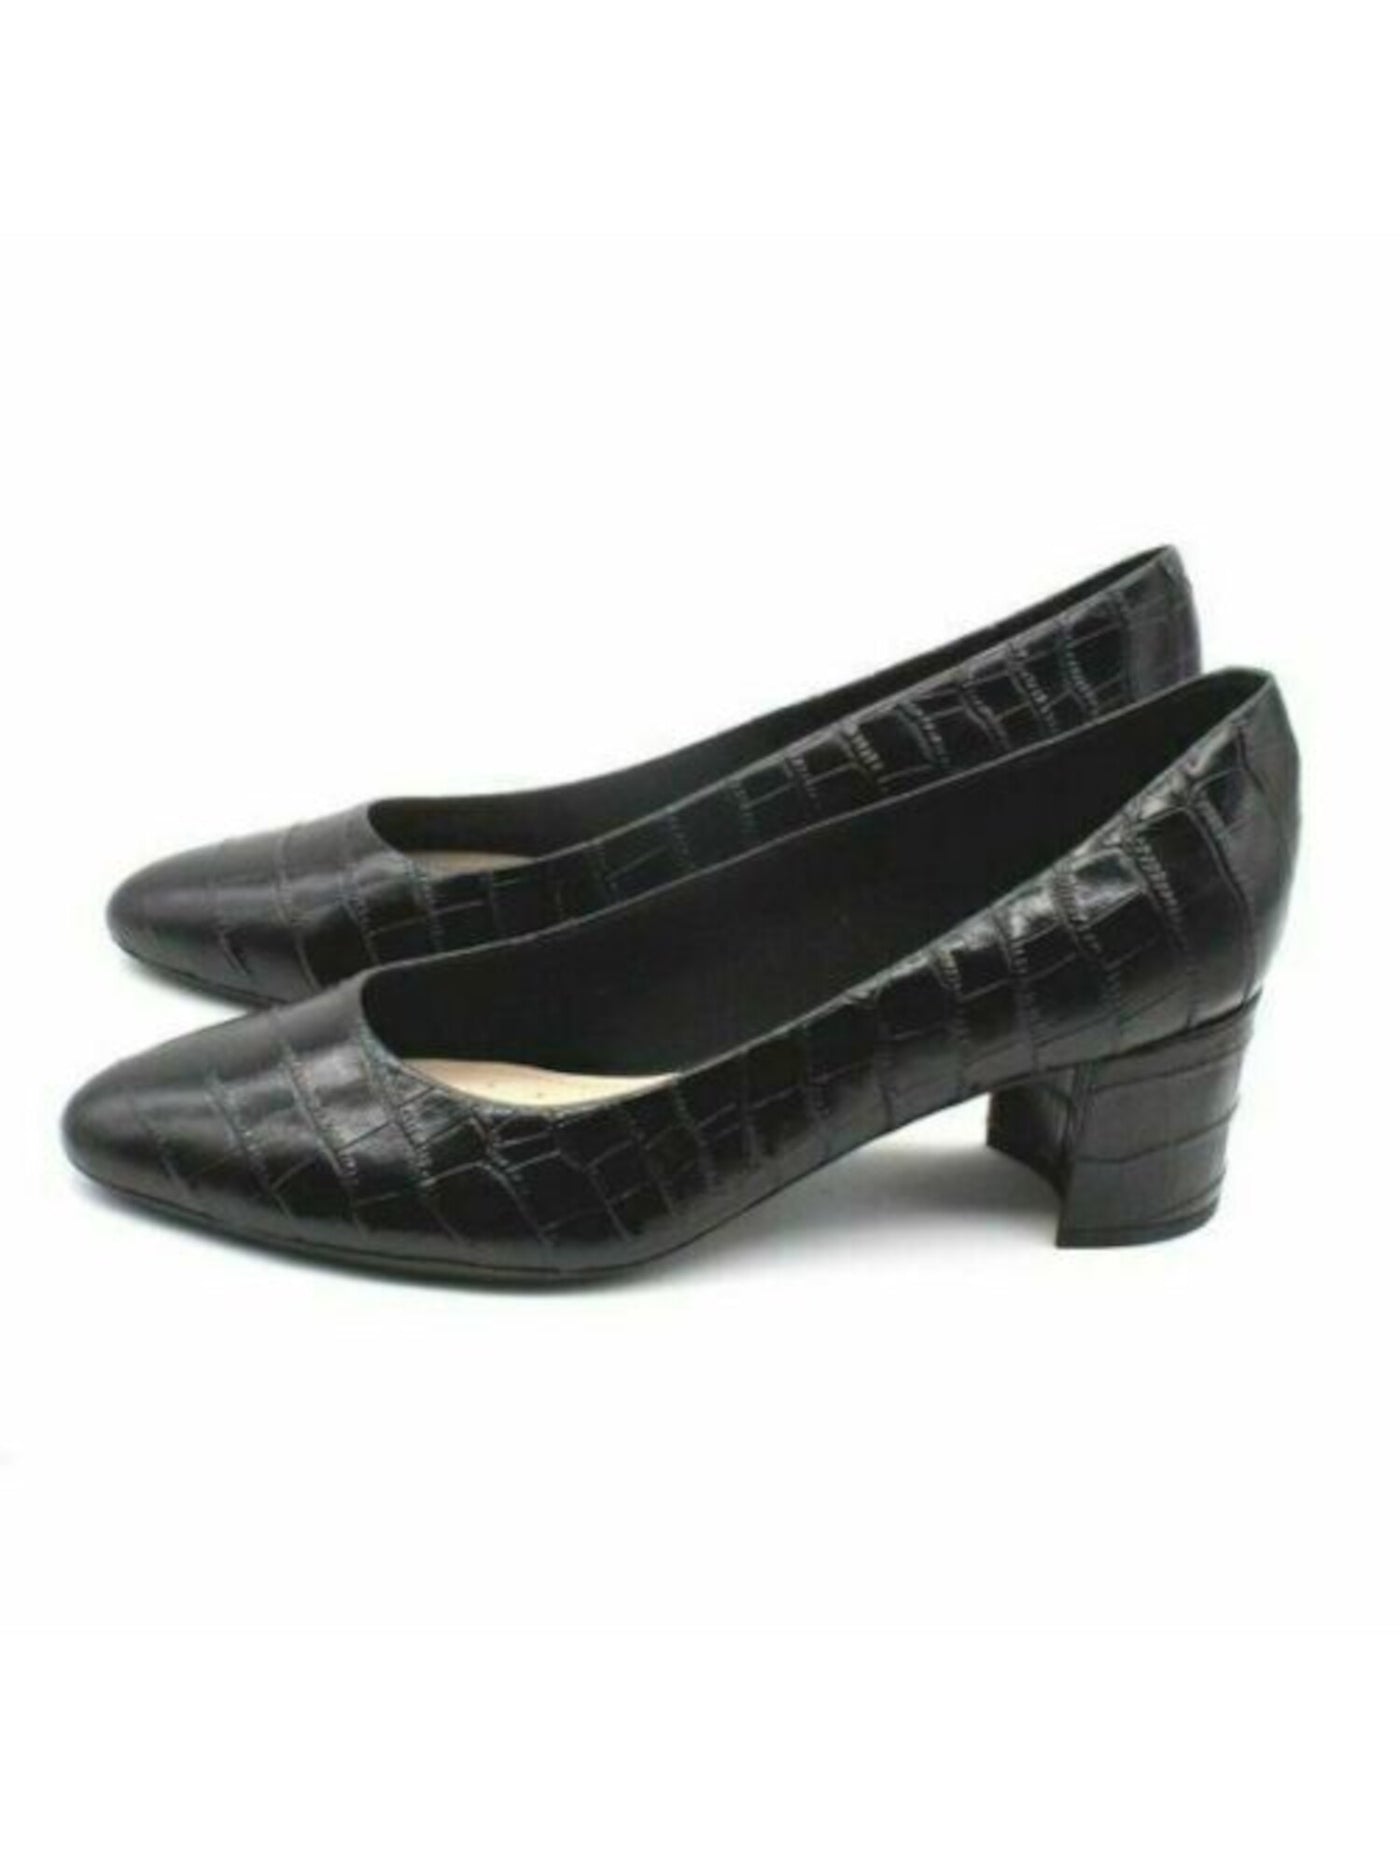 EVOLVE Womens Black Cushioned Slip Resistant Almond Toe Block Heel Slip On Leather Dress Pumps 8.5